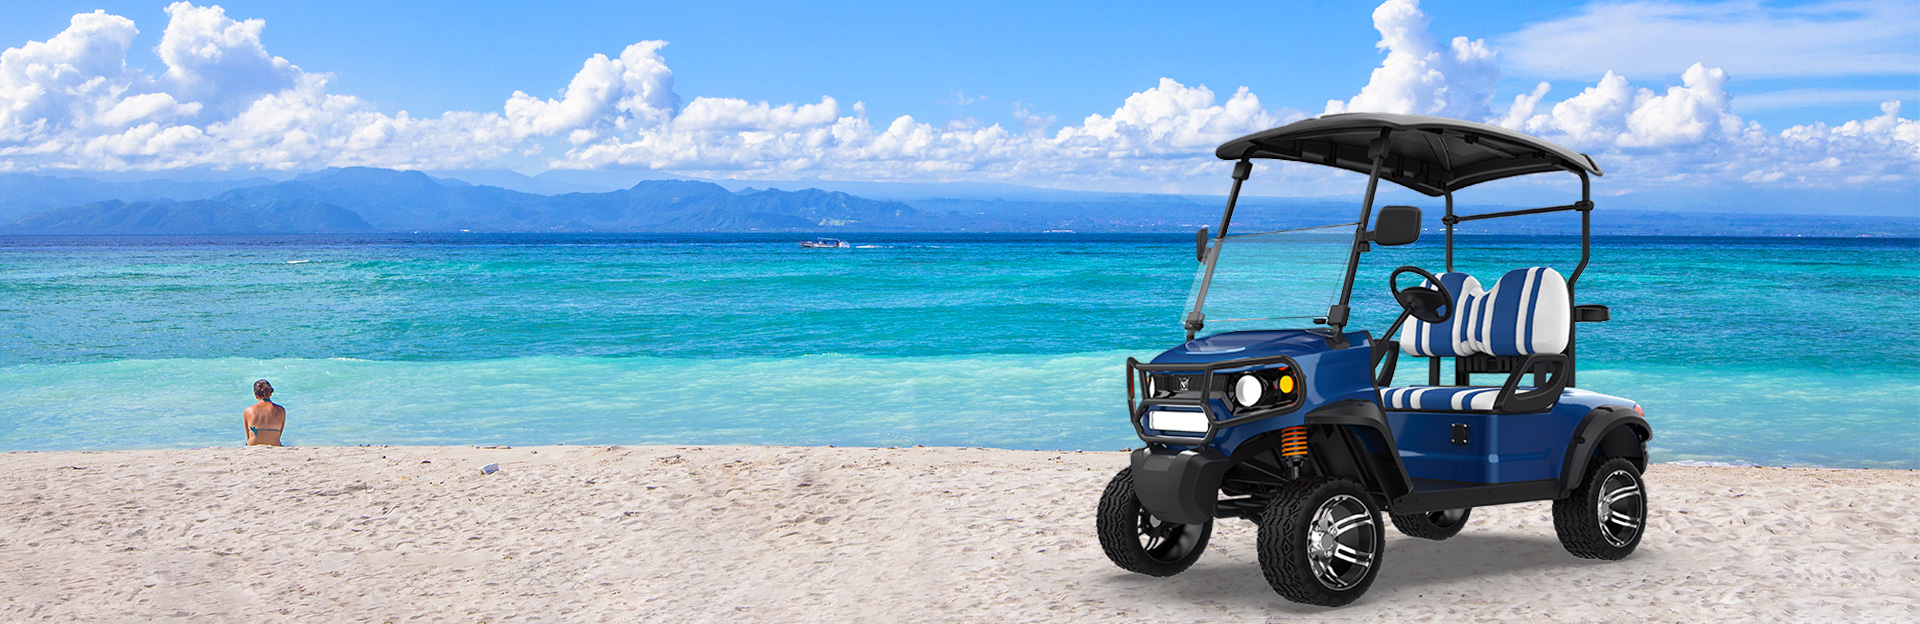 Kinghike Golf Cart - Where Luxury Meets Performance